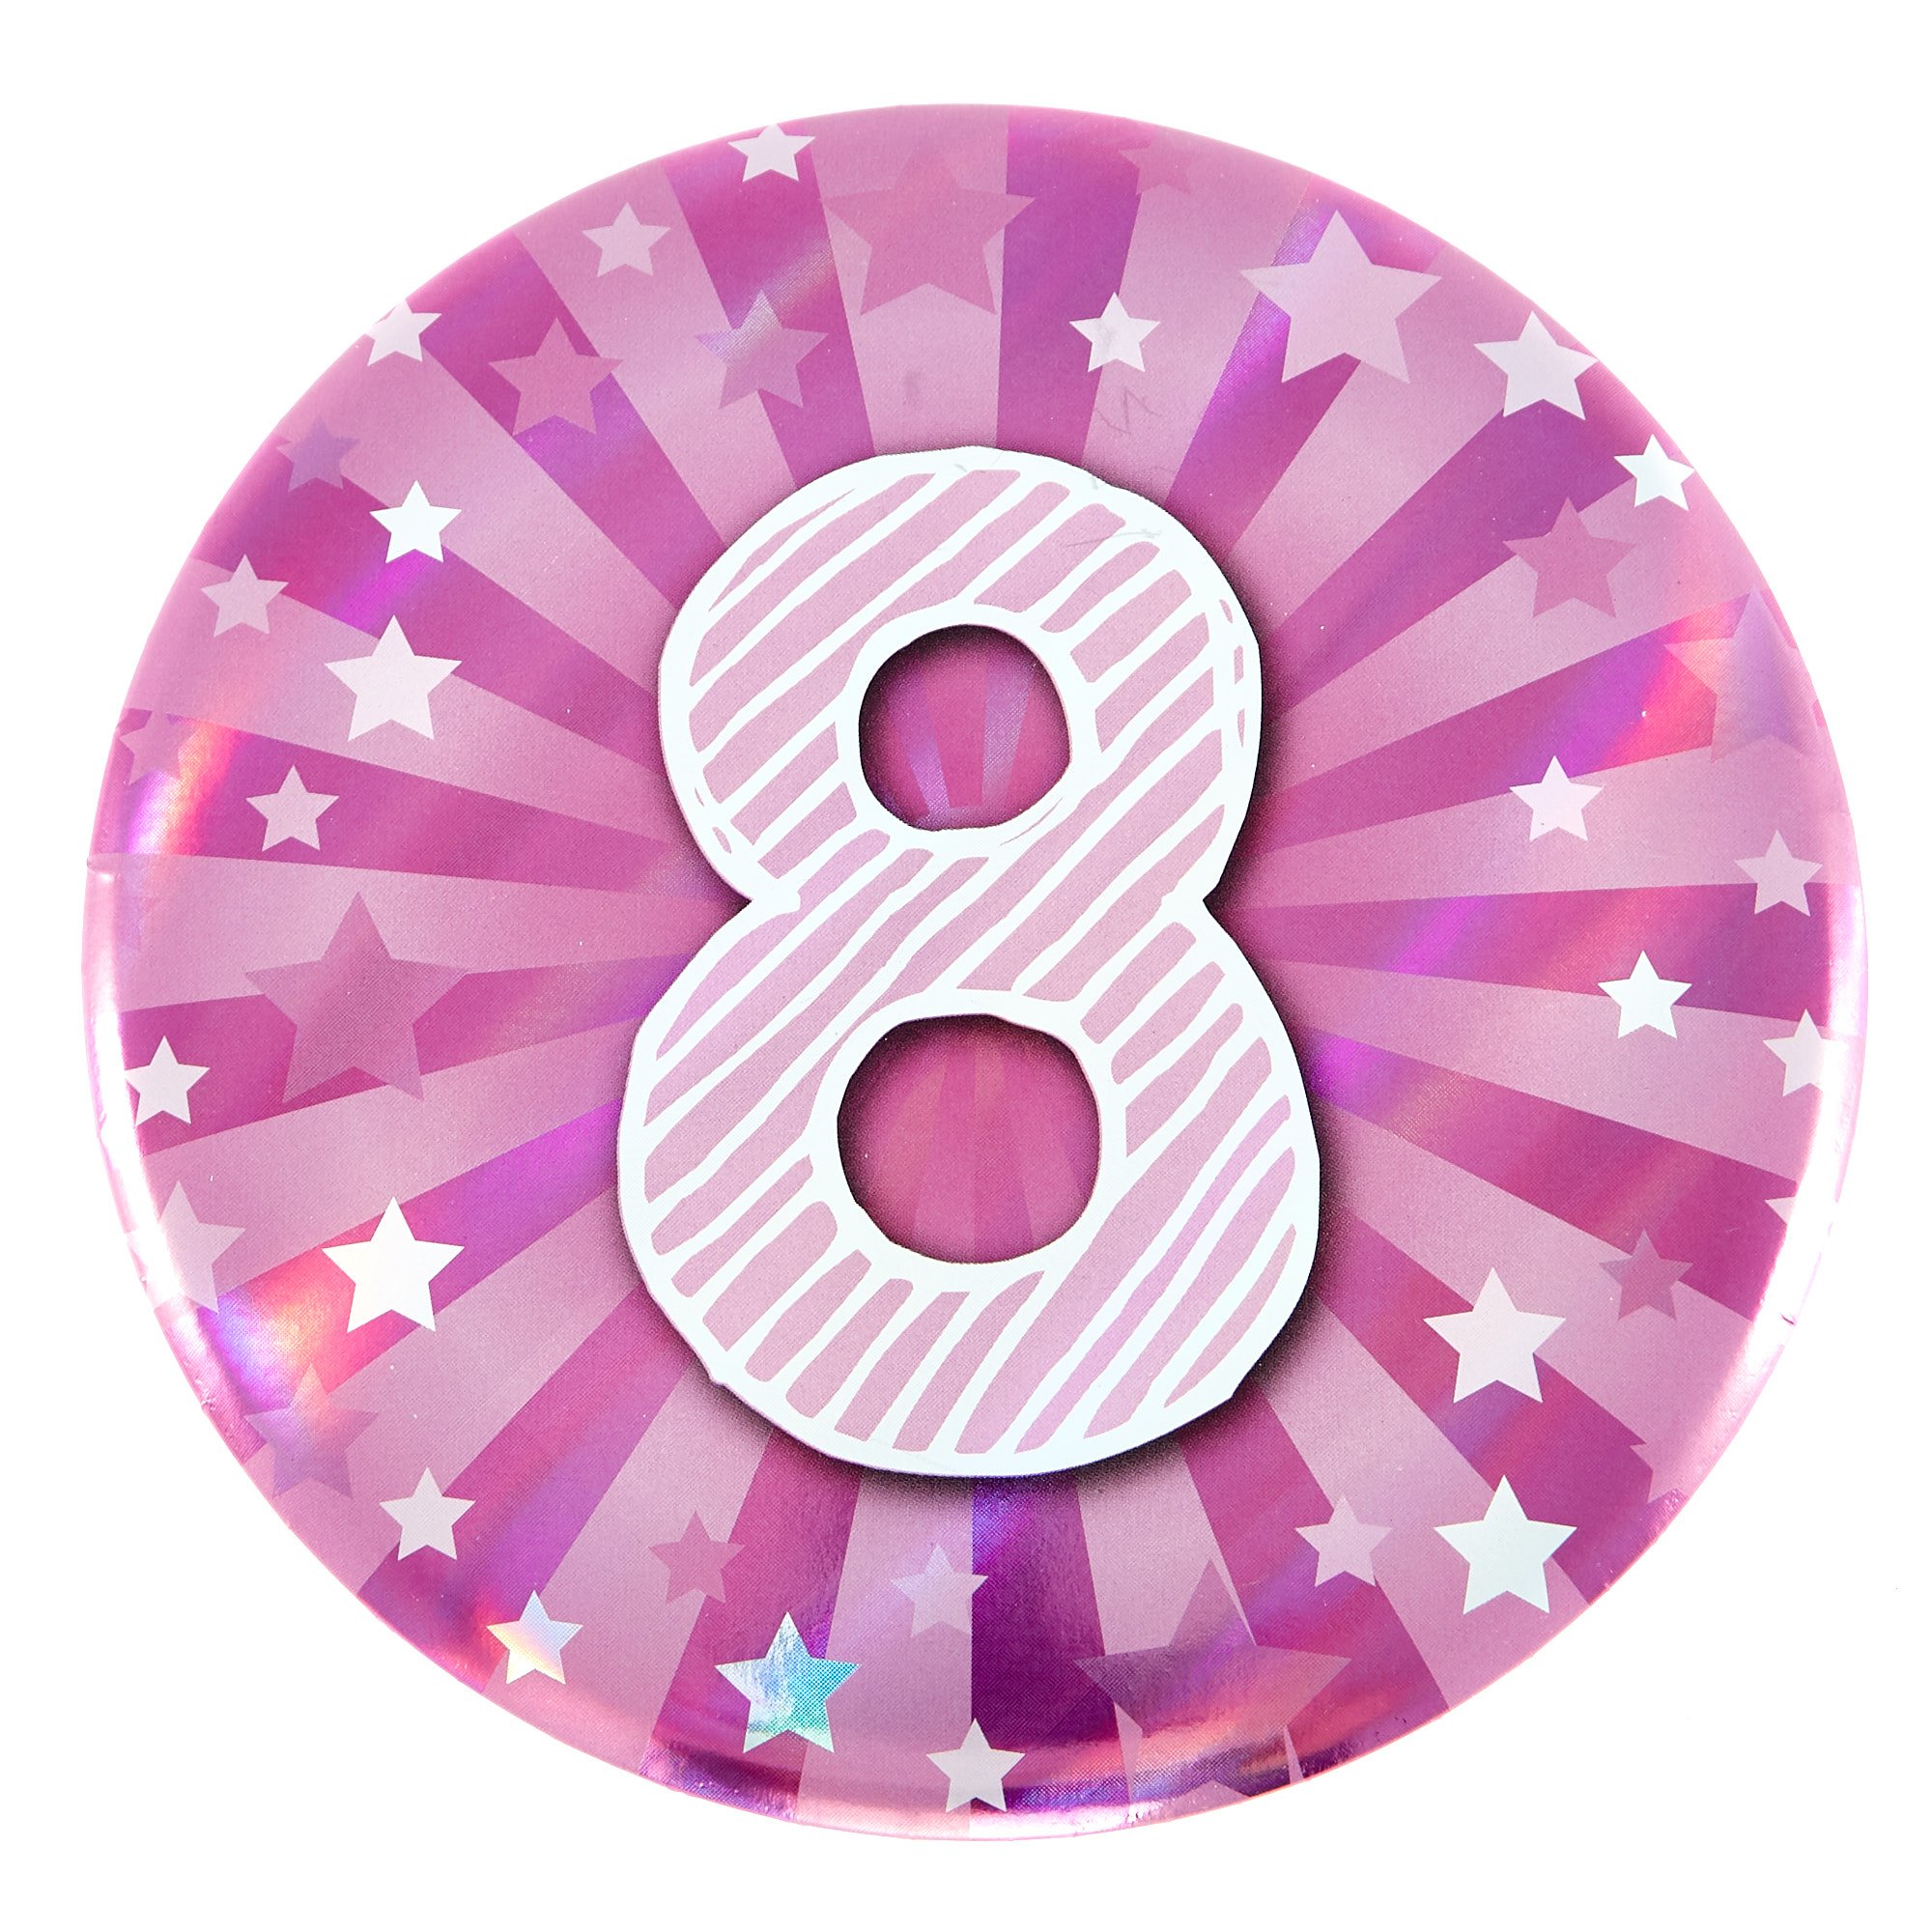 Giant 8th Birthday Badge - Pink